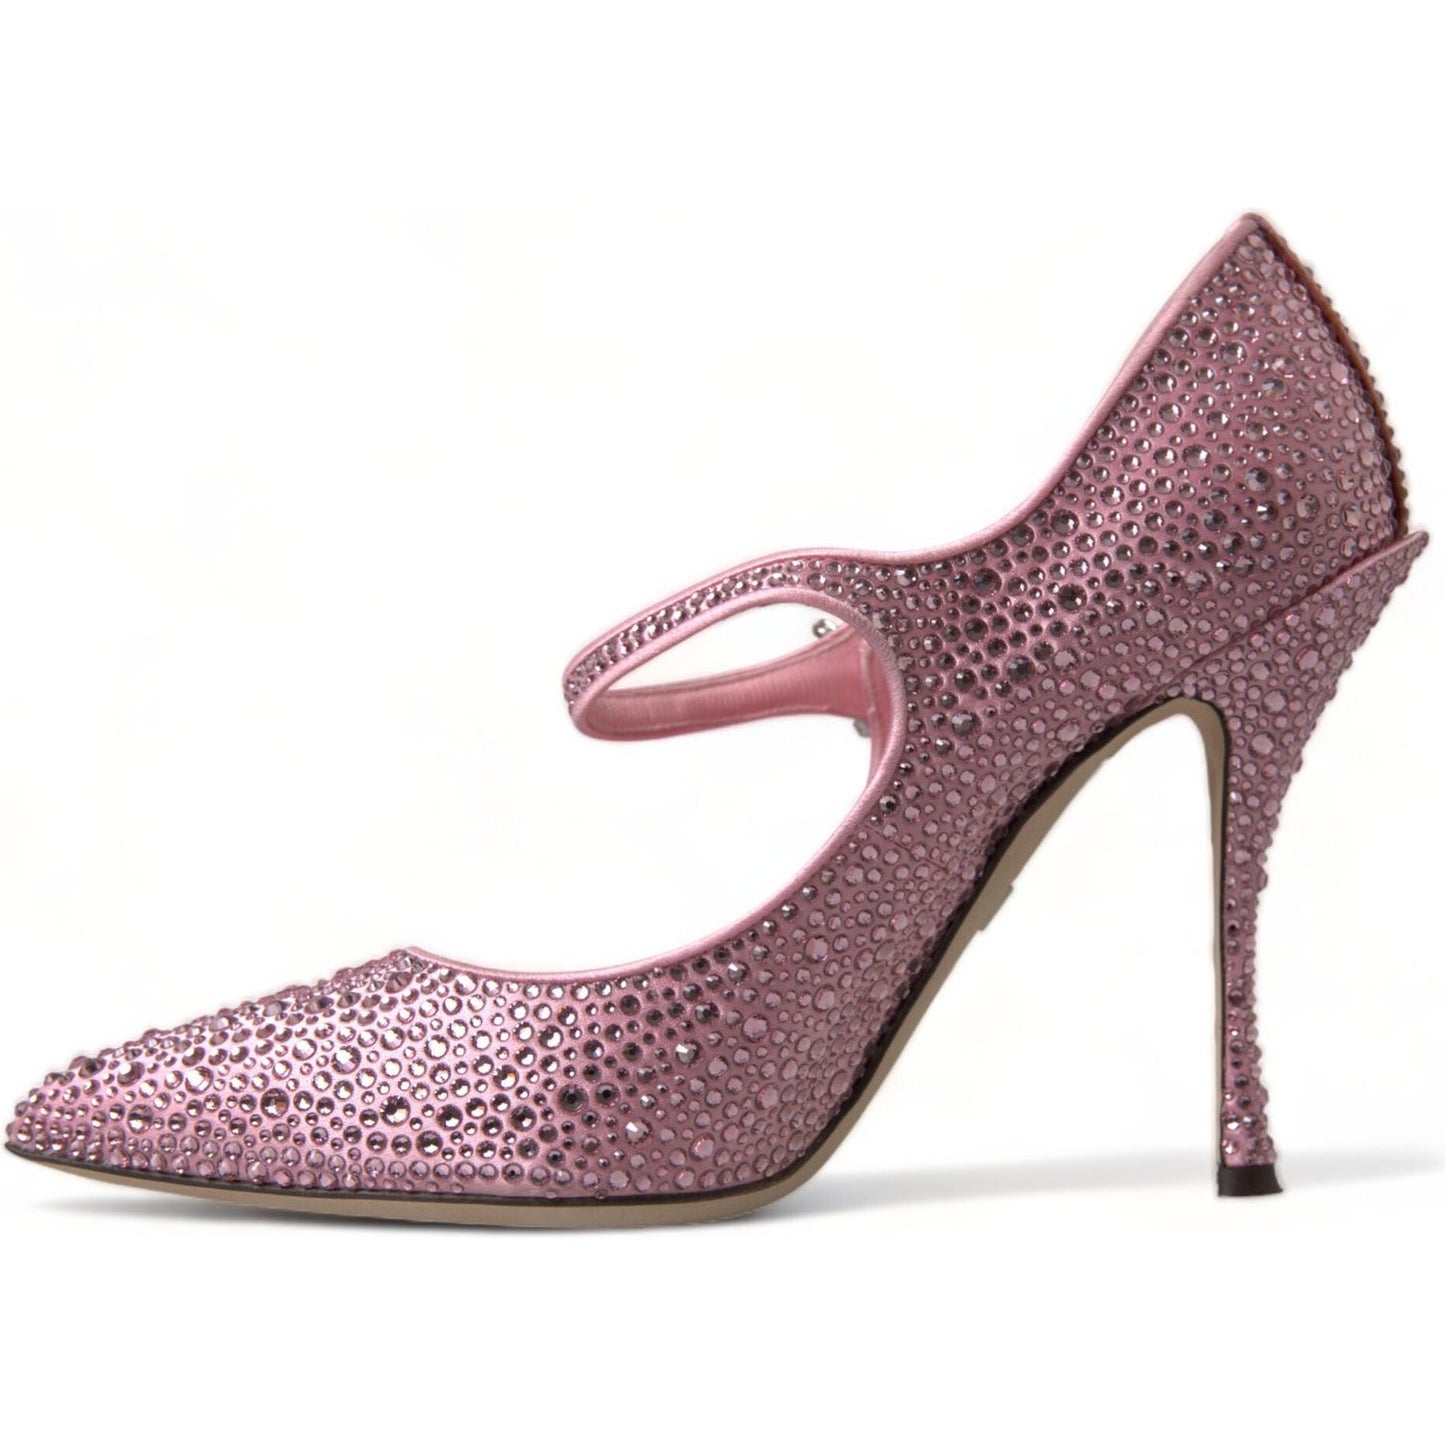 Dolce & Gabbana Enchanting Pink Crystal Pumps pink-strass-crystal-heels-pumps-shoes 465A9310-bg-scaled-c59ead4f-a0d.jpg